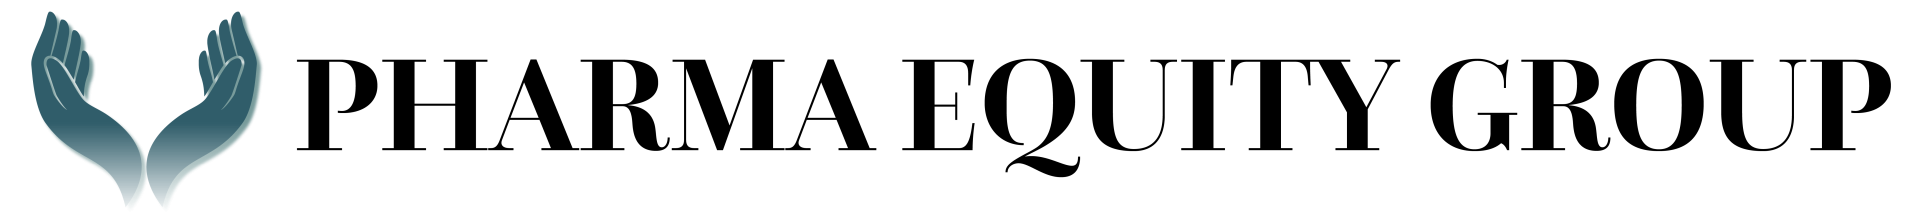 Pharma Equity Group logo